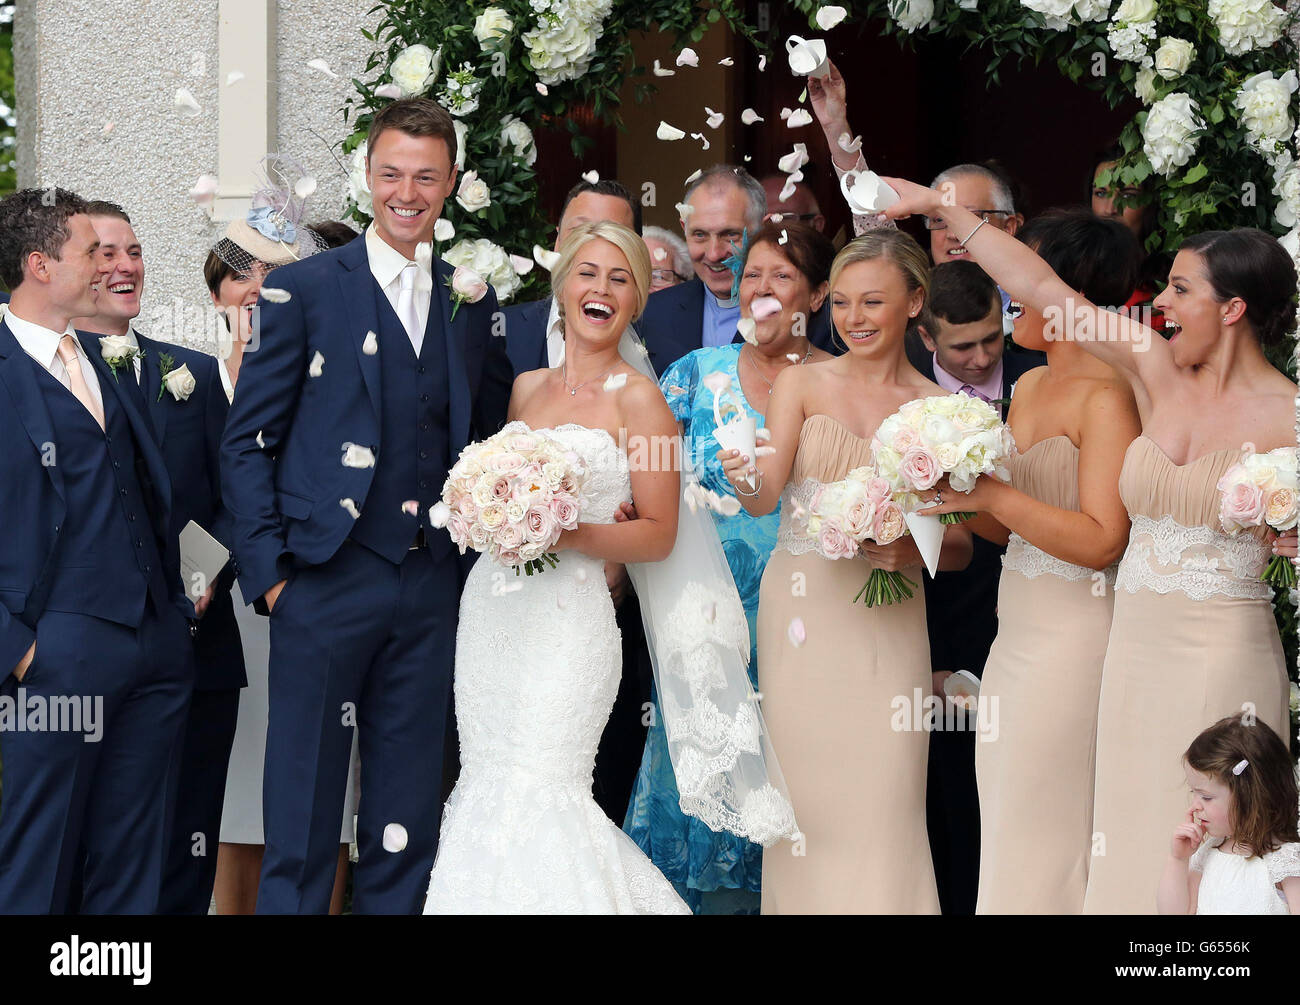 Jonny Evans wedding Stock Photo